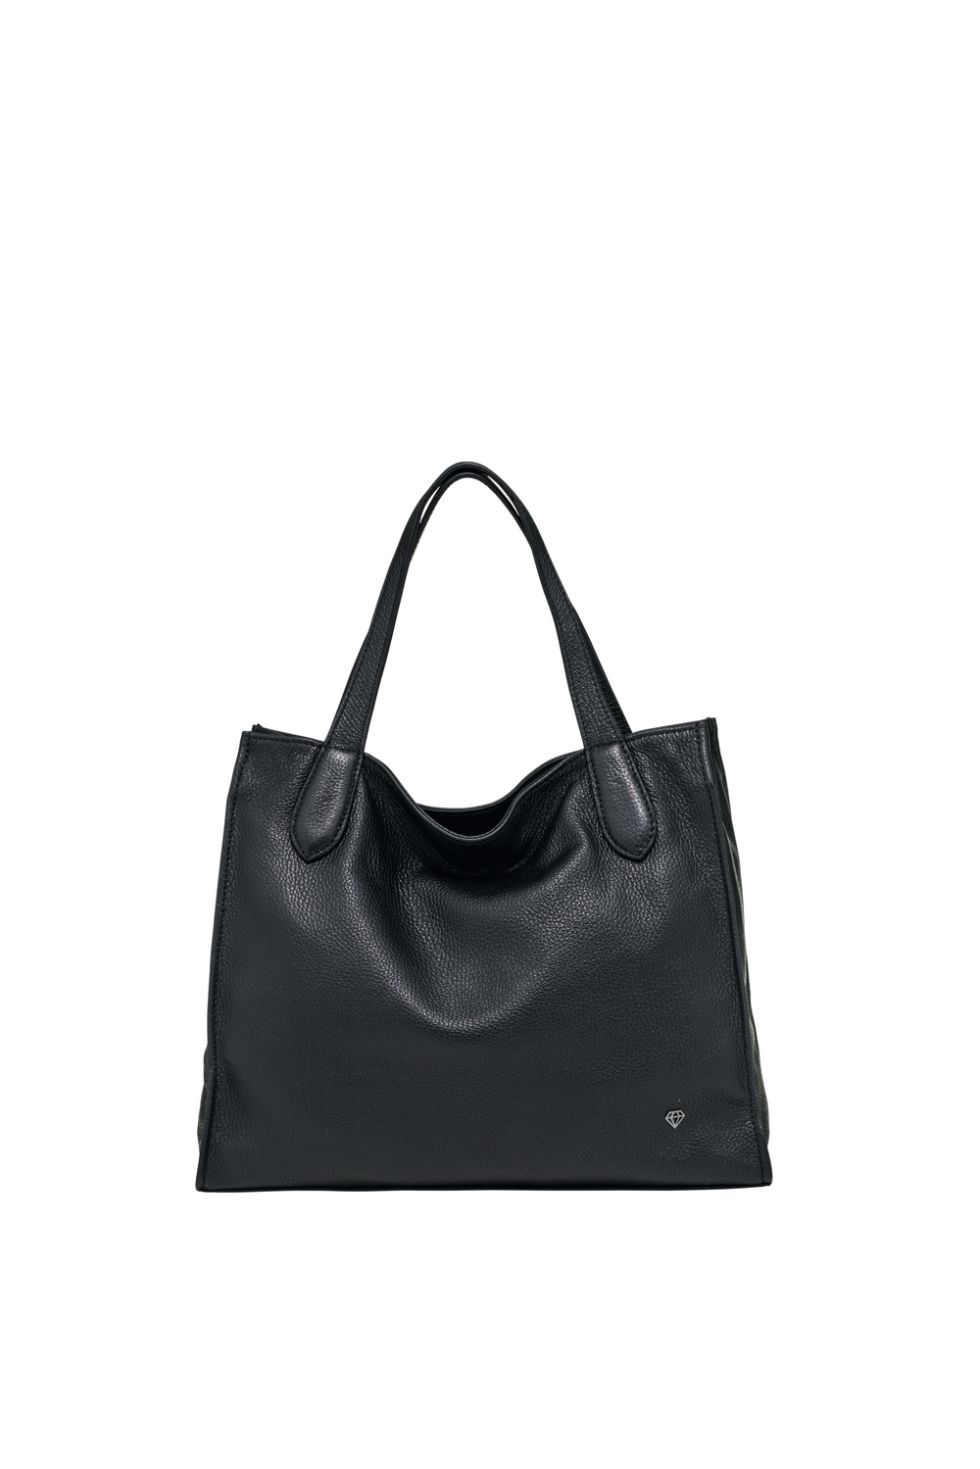 Handbag, Bag, Black, Leather, Fashion accessory, Shoulder bag, Product, Hobo bag, Tote bag, Material property, 